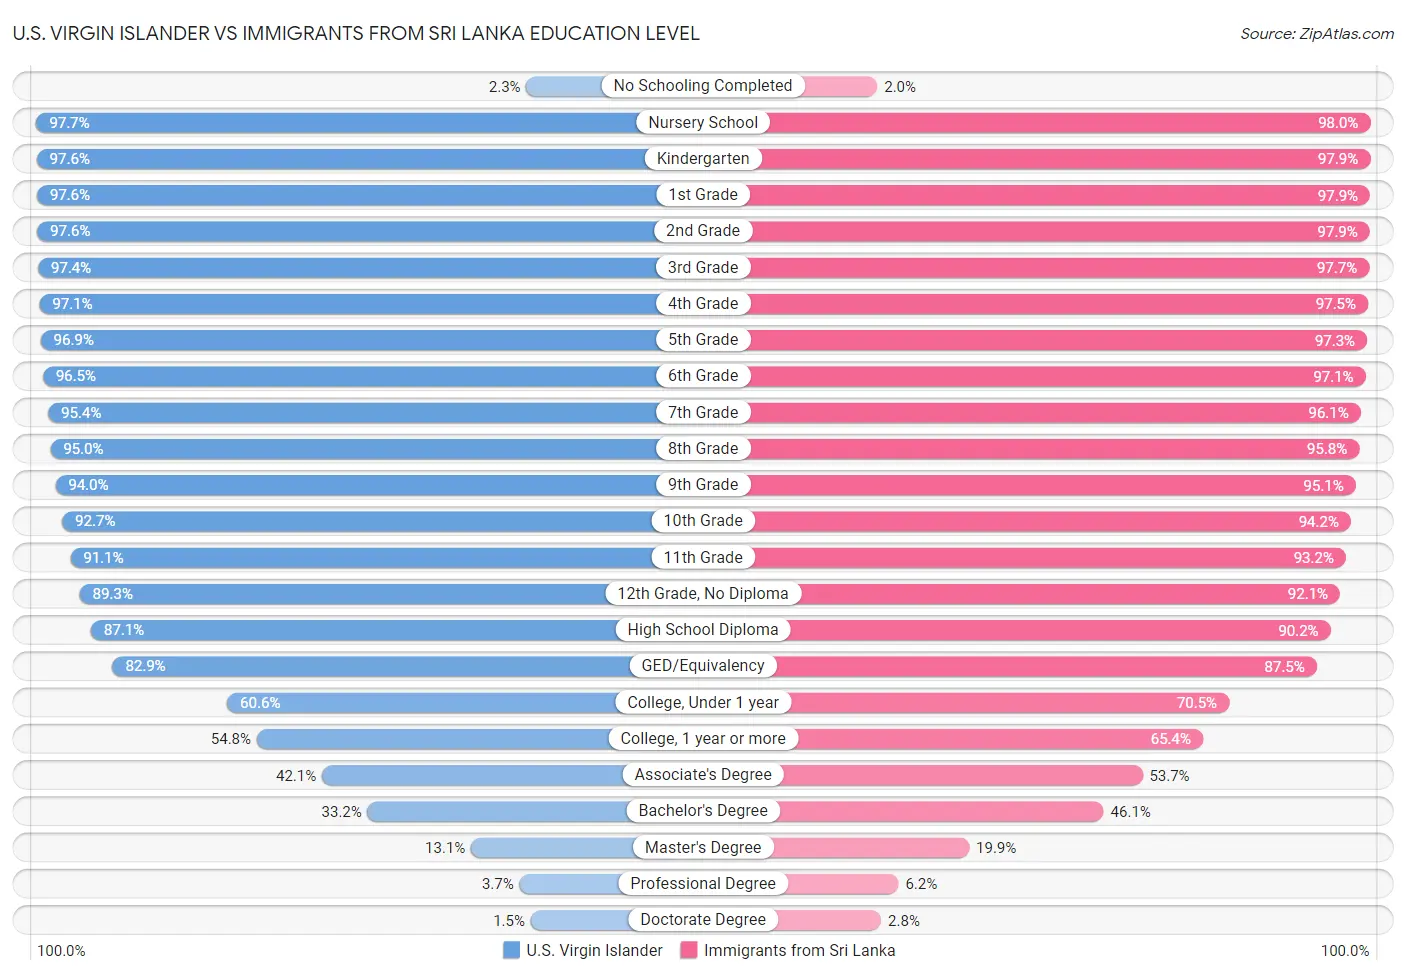 U.S. Virgin Islander vs Immigrants from Sri Lanka Education Level